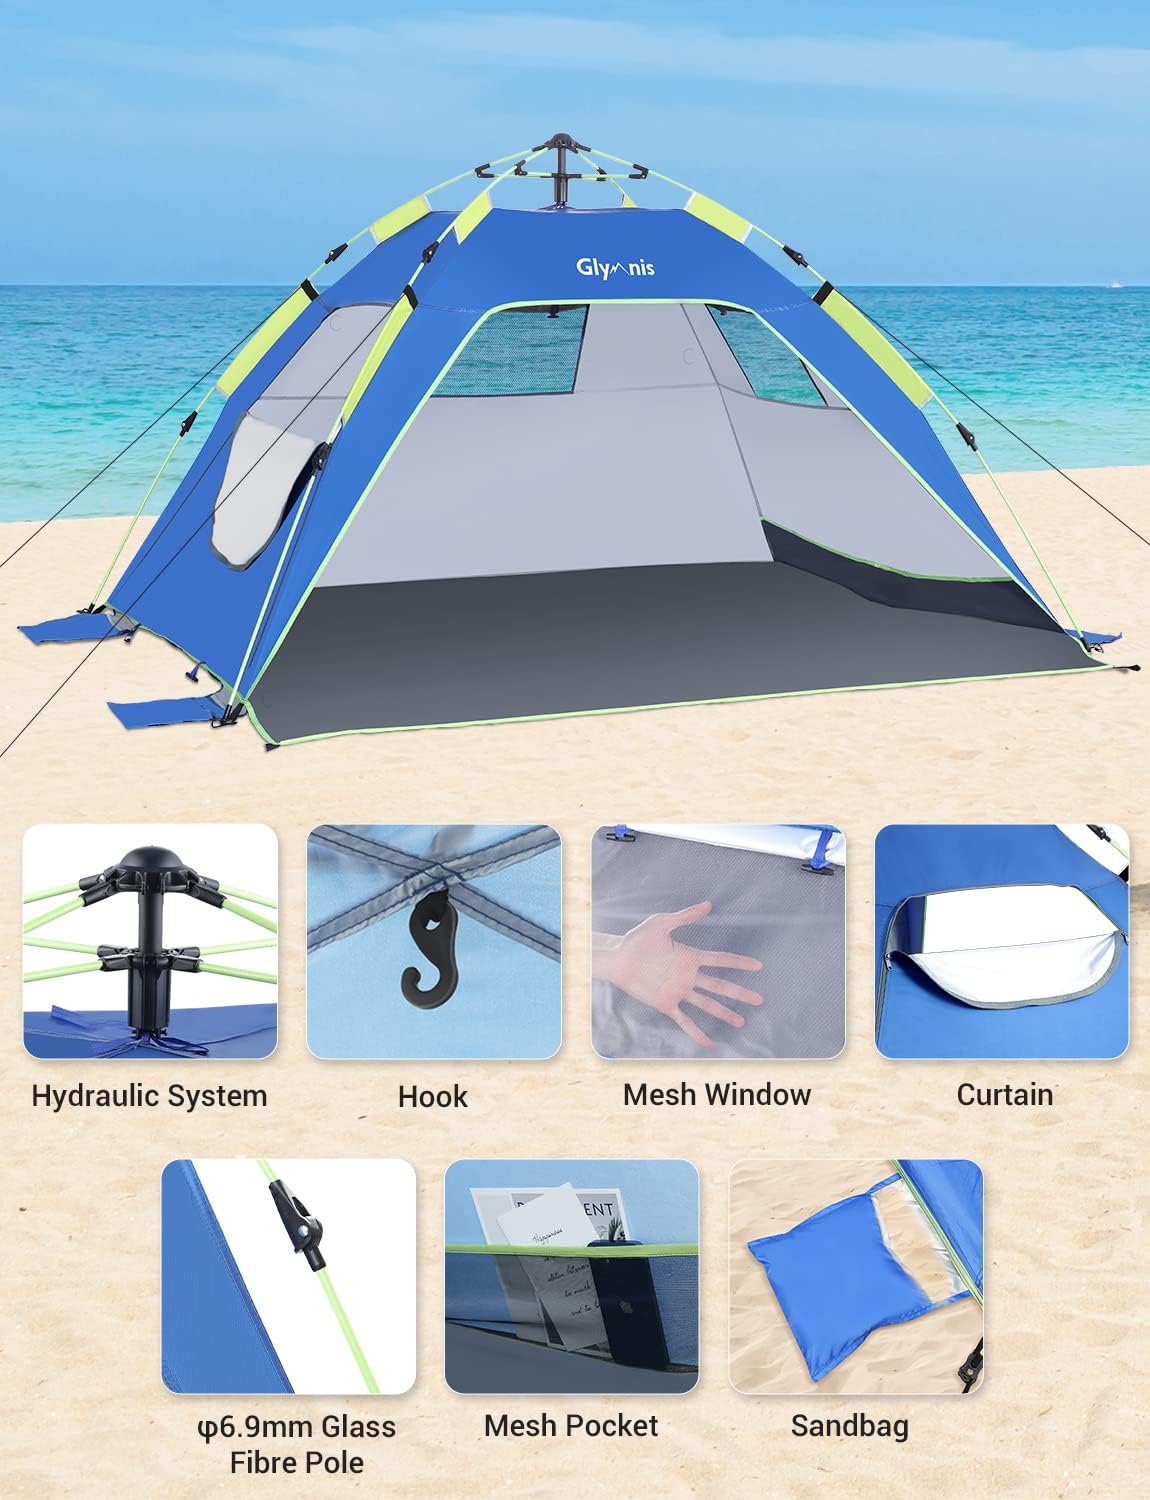 glymnis gazebo tent blue oxford pop up beach tent details